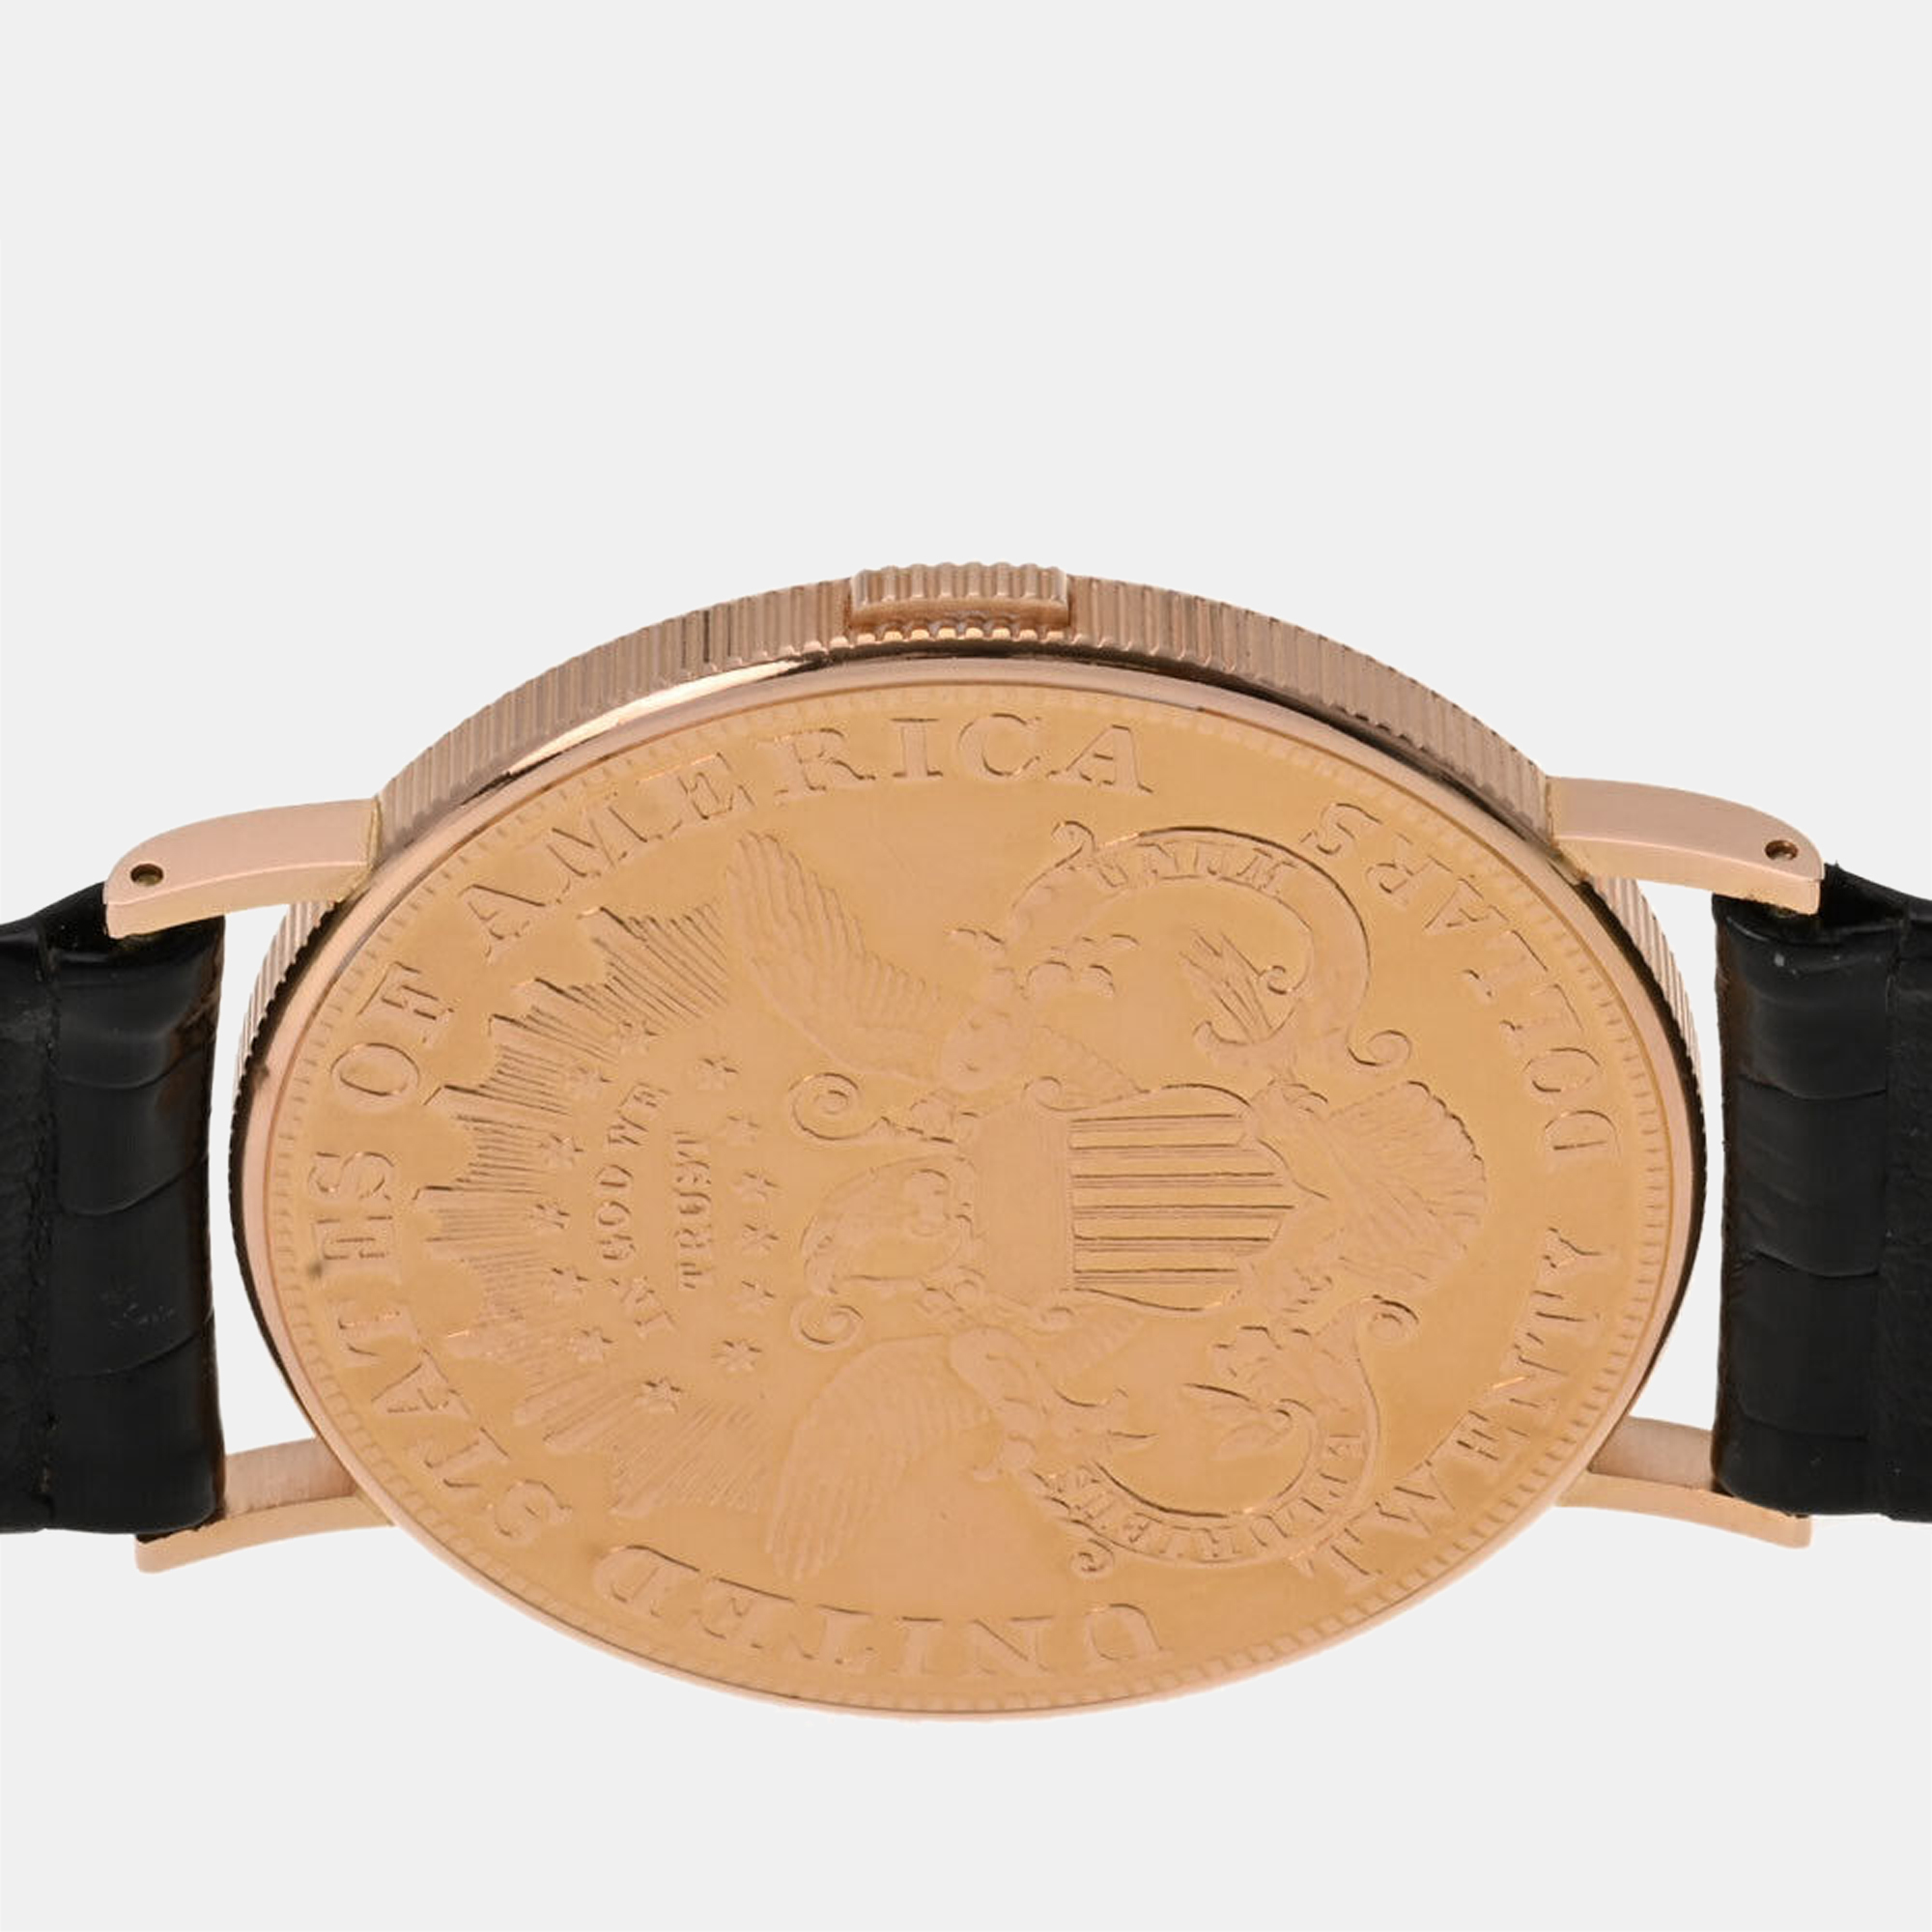 Piaget Pink 18K Rose Gold Possession 800000105973000 Quartz Women's Wristwatch 19.5 Mm